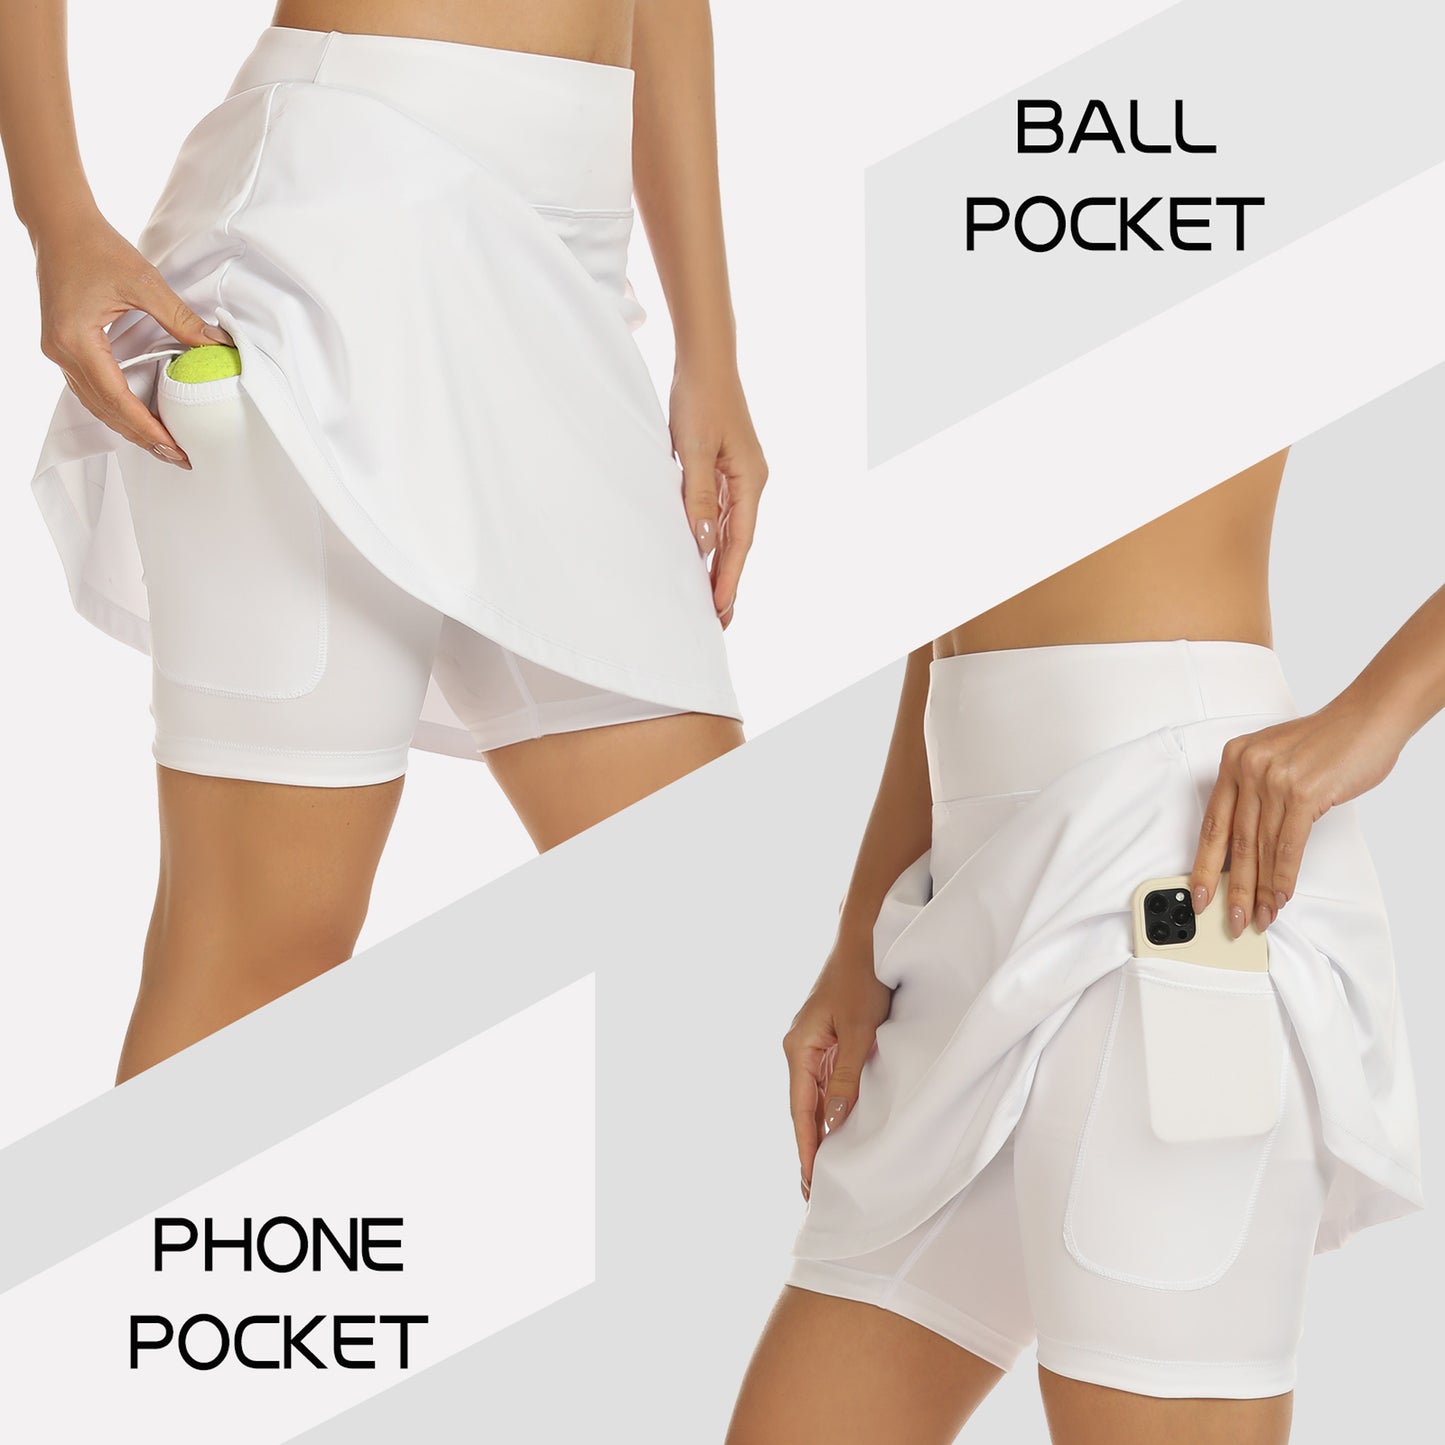 YILANMY Women's 20" Knee Length Skorts Skirts Athletic Tennis Skirt Modest Golf Skorts Pocket UV Protection